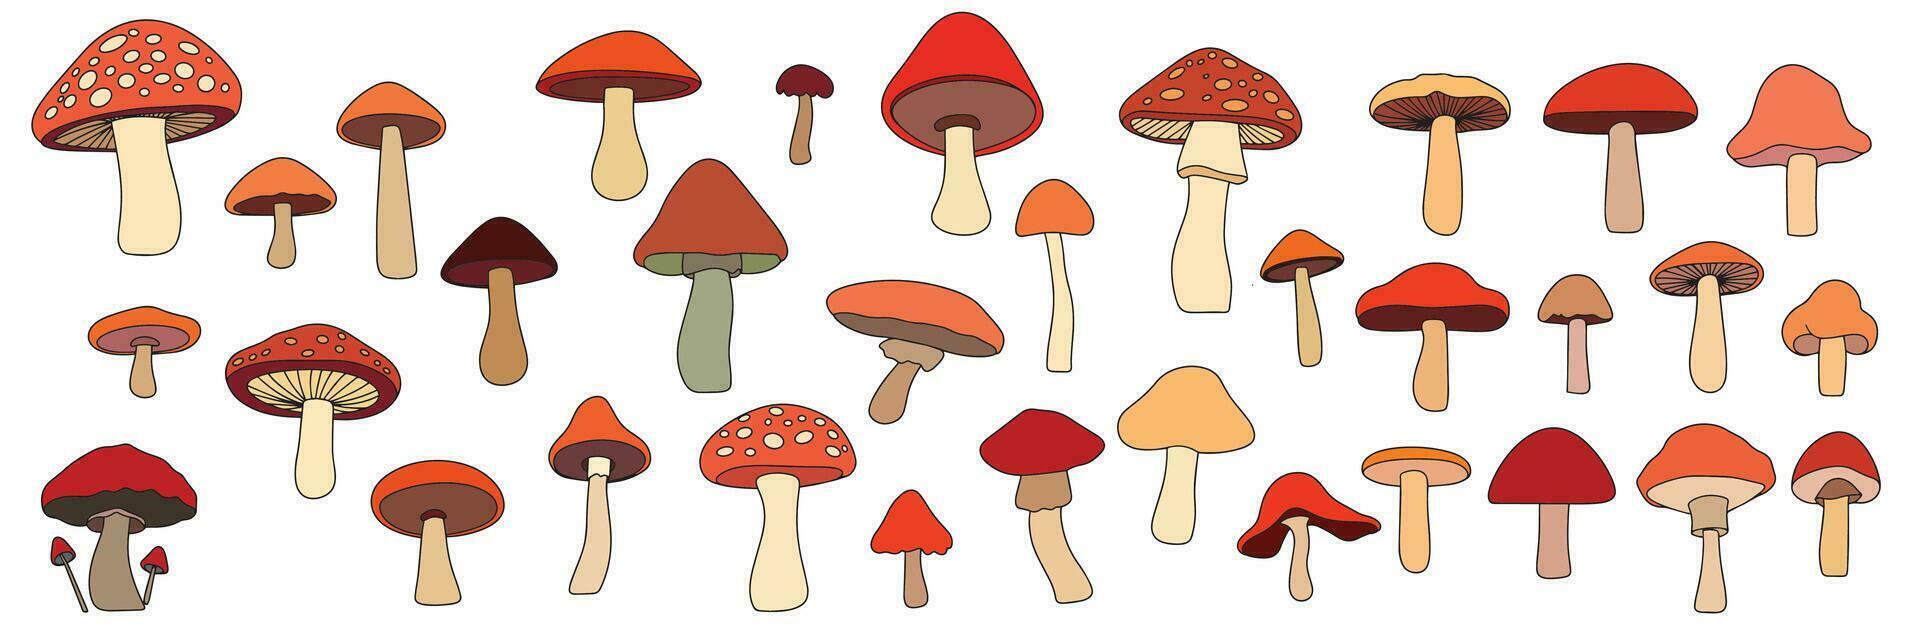 conjunto do cogumelos colori contorno. mão desenhado cogumelo dentro rabisco estilo. cogumelos com contorno. vetor ilustração.